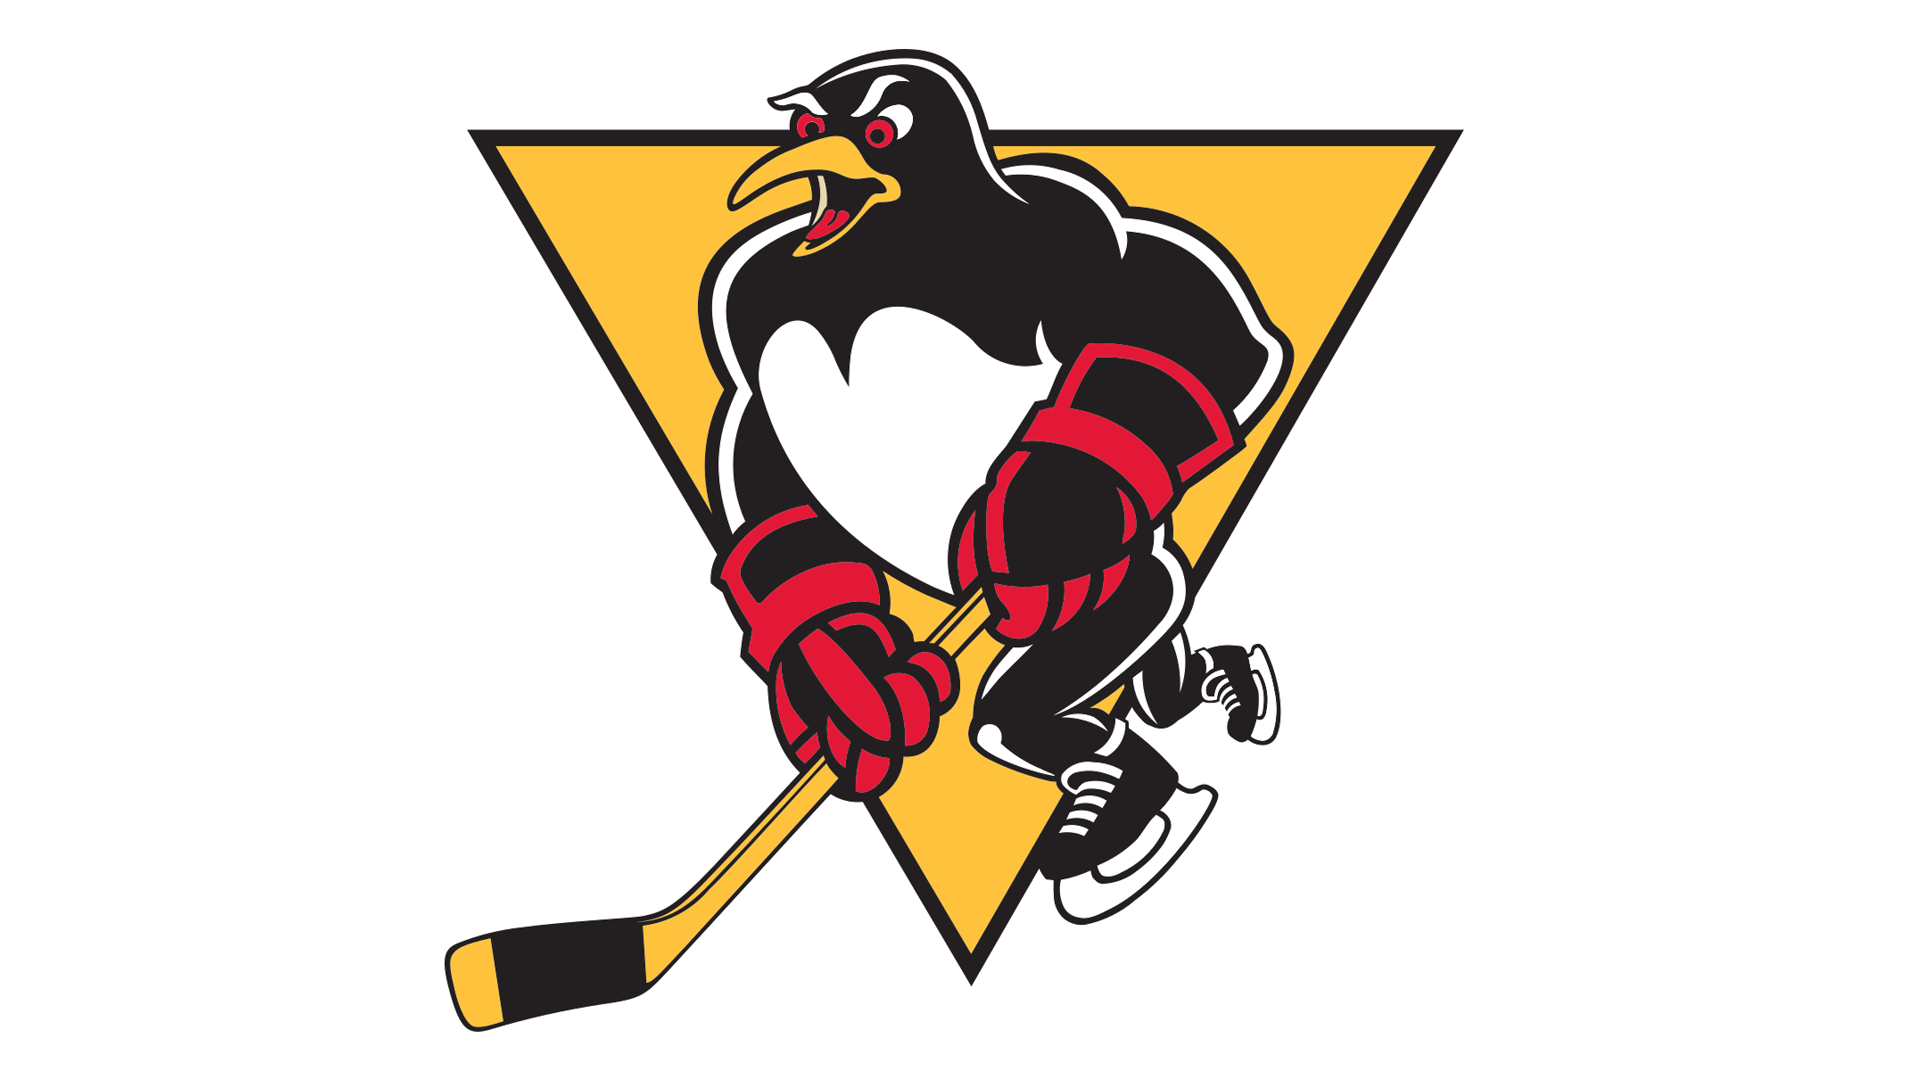 Картинки хоккейных команд. Хоккейные команды НХЛ. Логотипы хоккейных команд НХЛ. НХЛ Питтсбург Пингвинз. Хоккейная команда NHL логотипы.